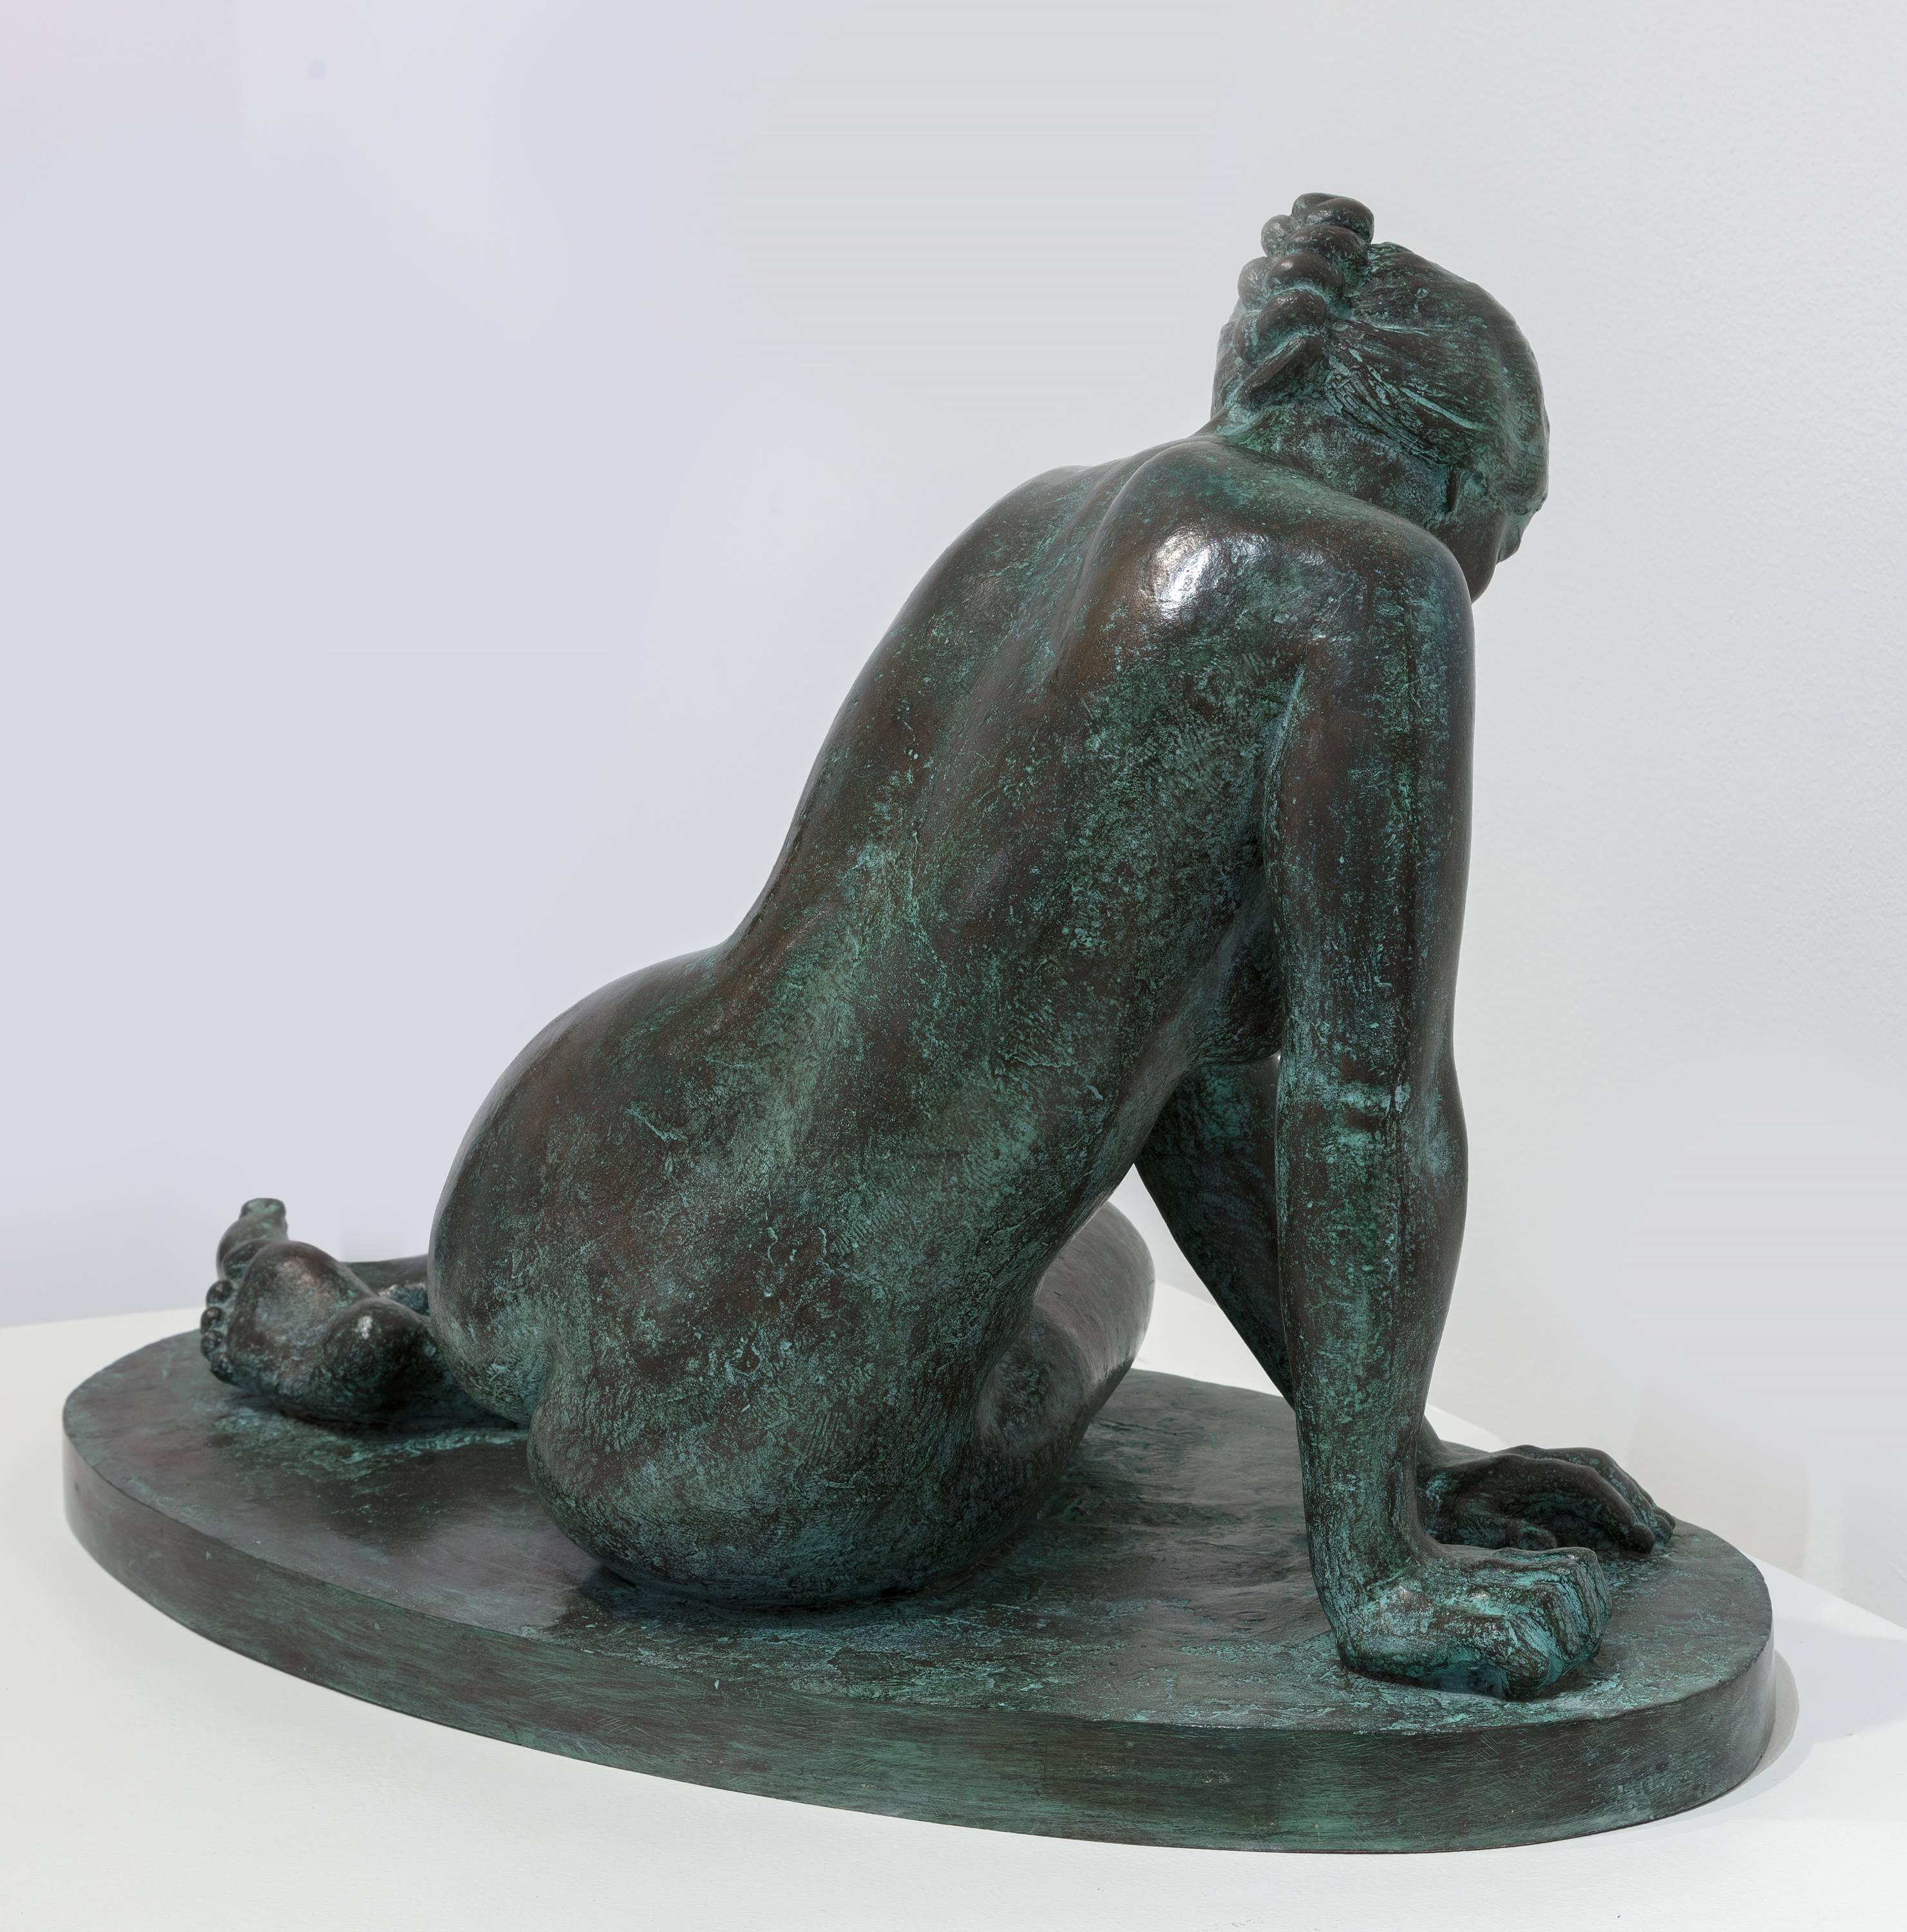 A bronze sculpture by Latin American artist Felipe Castaneda. 